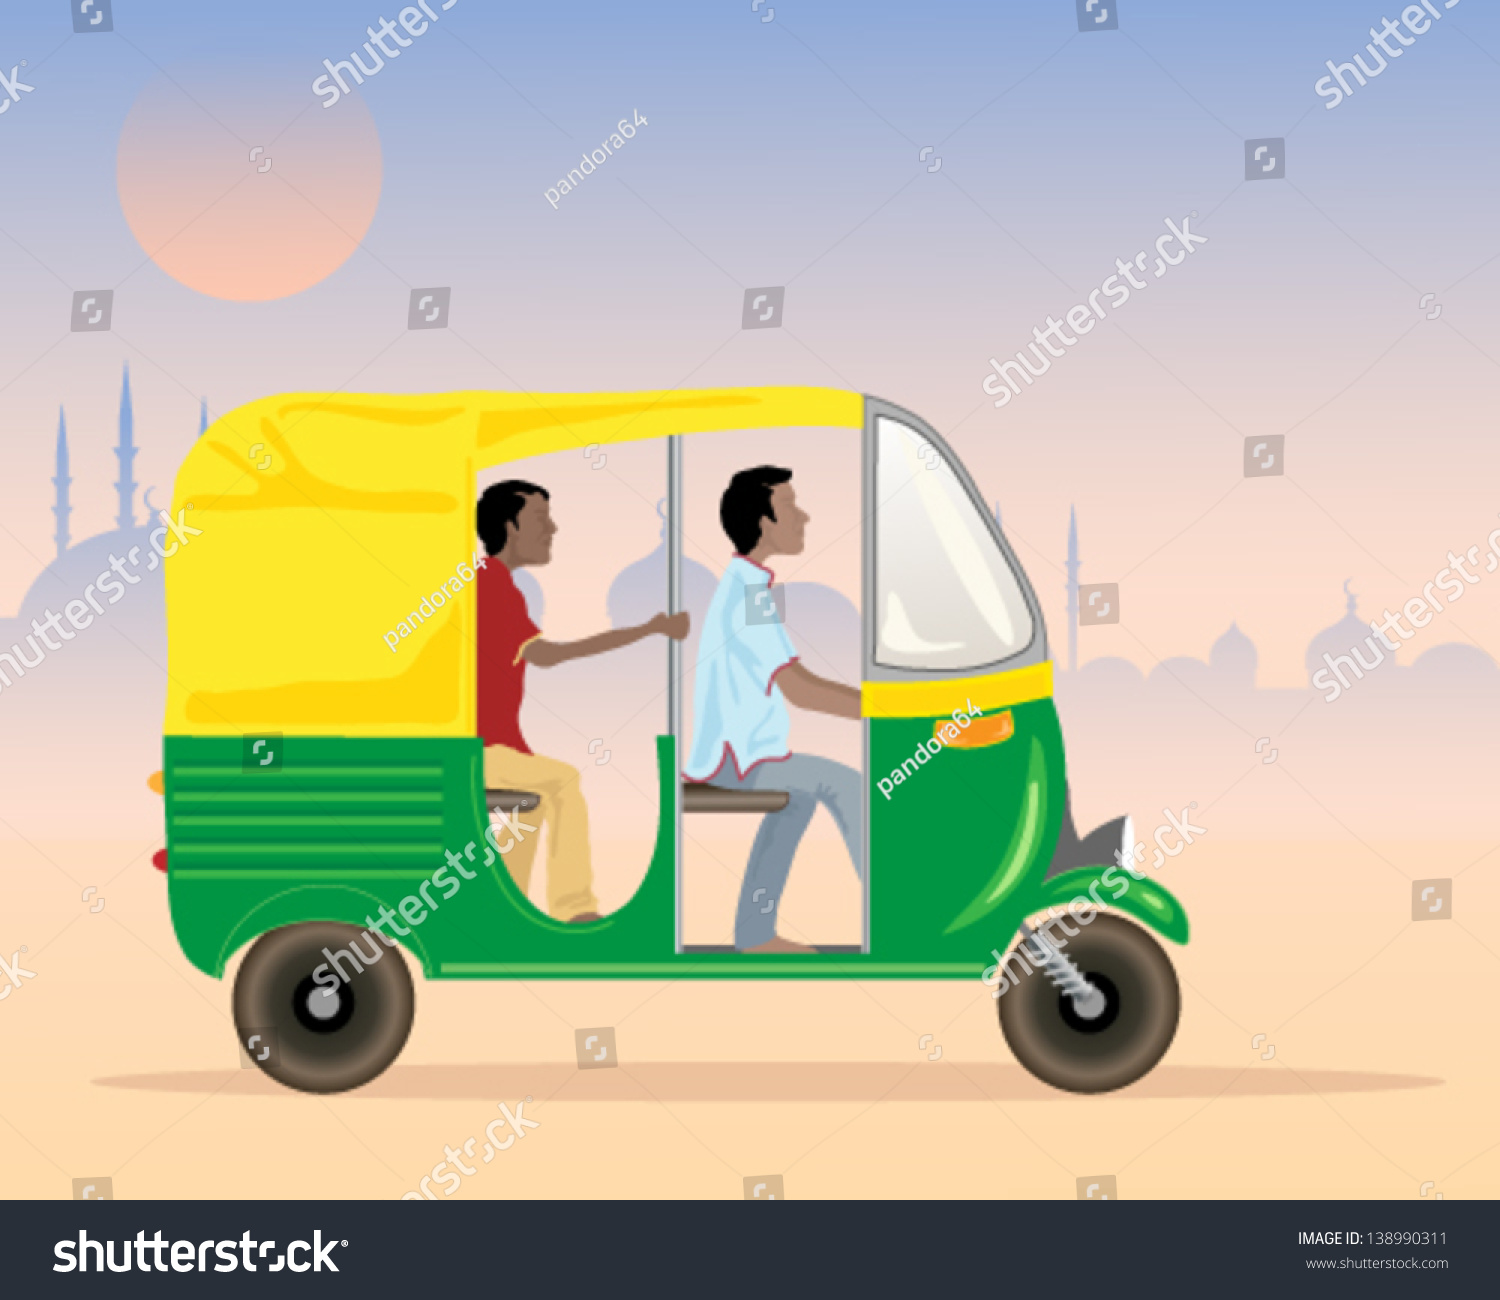 clipart of auto rickshaw - photo #23